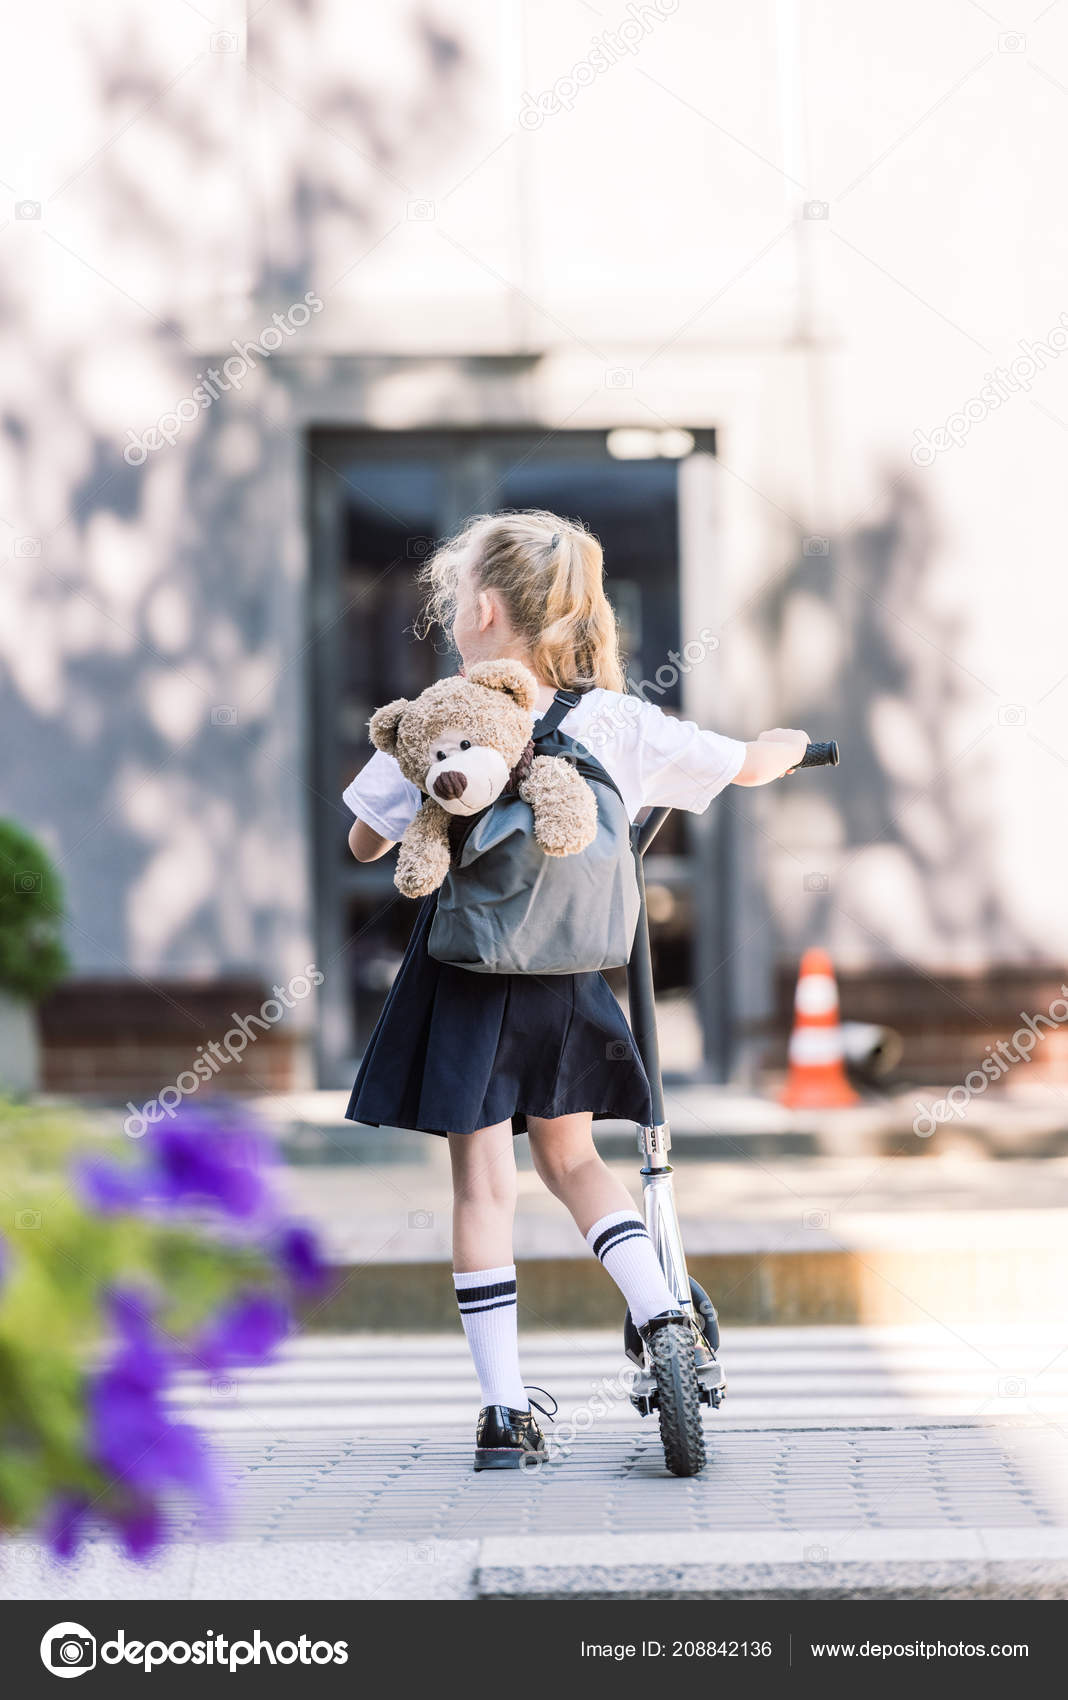 girl rides teddy bear